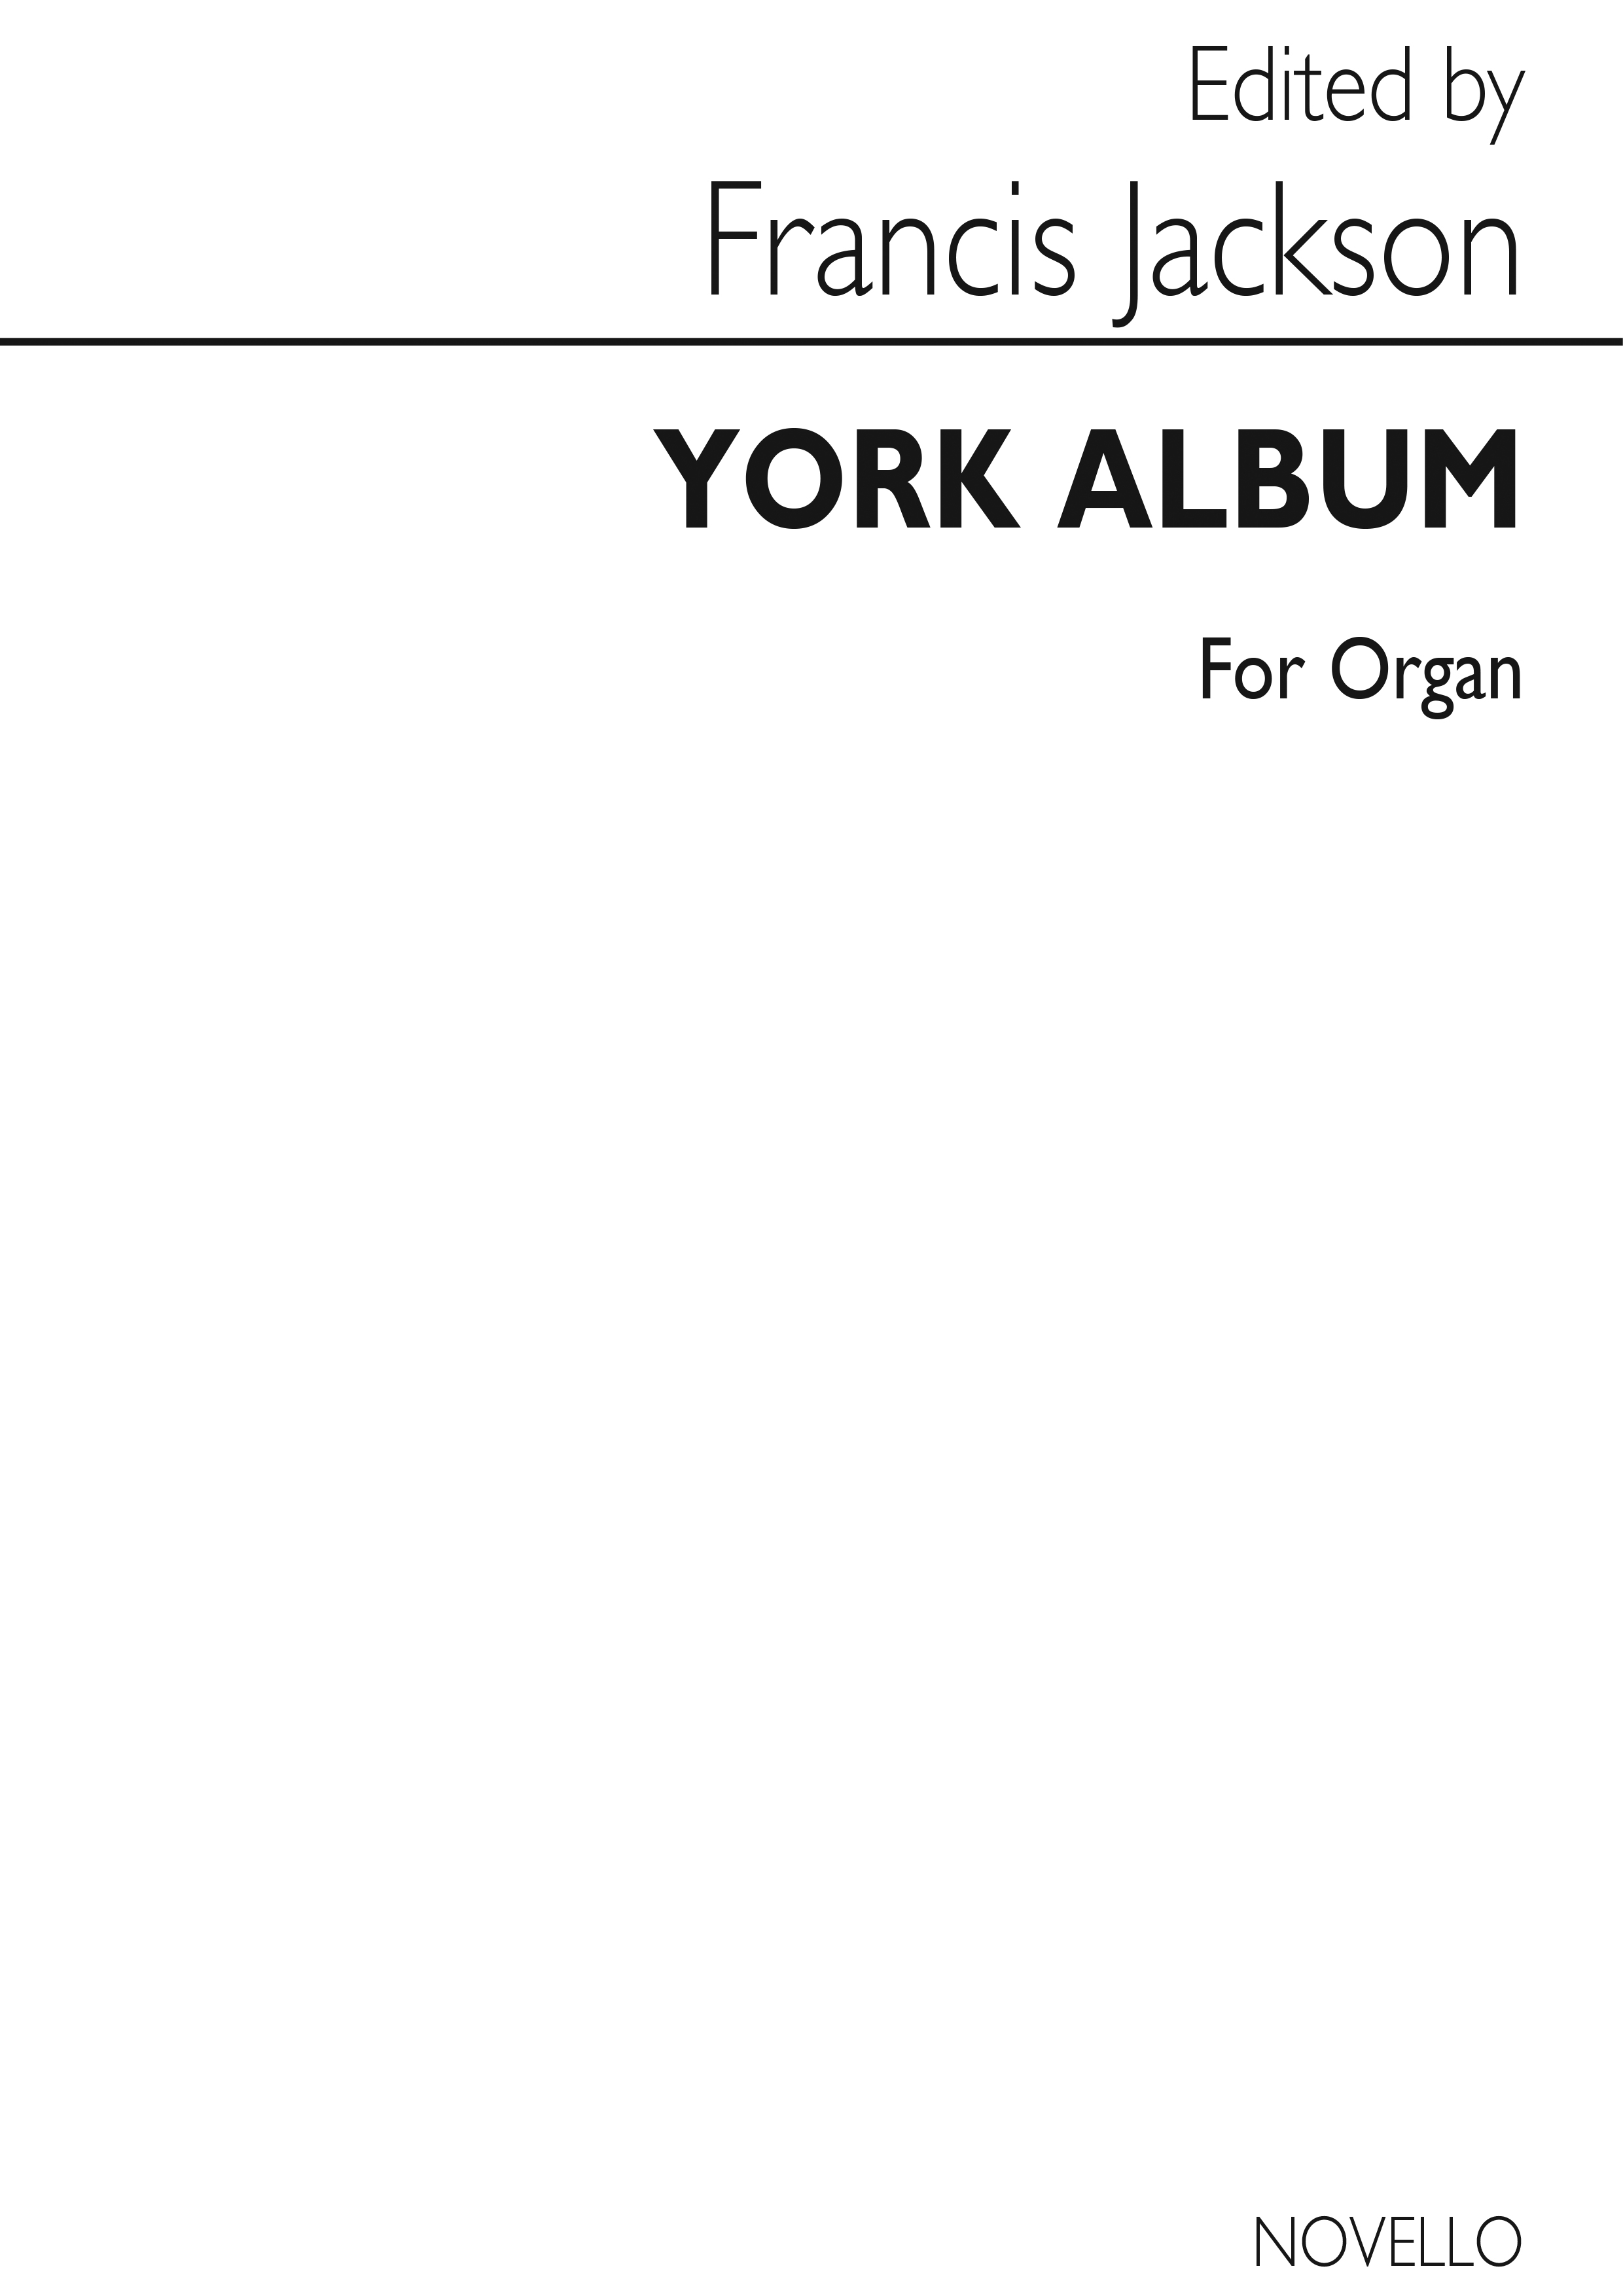 Jackson: The York Organ Album